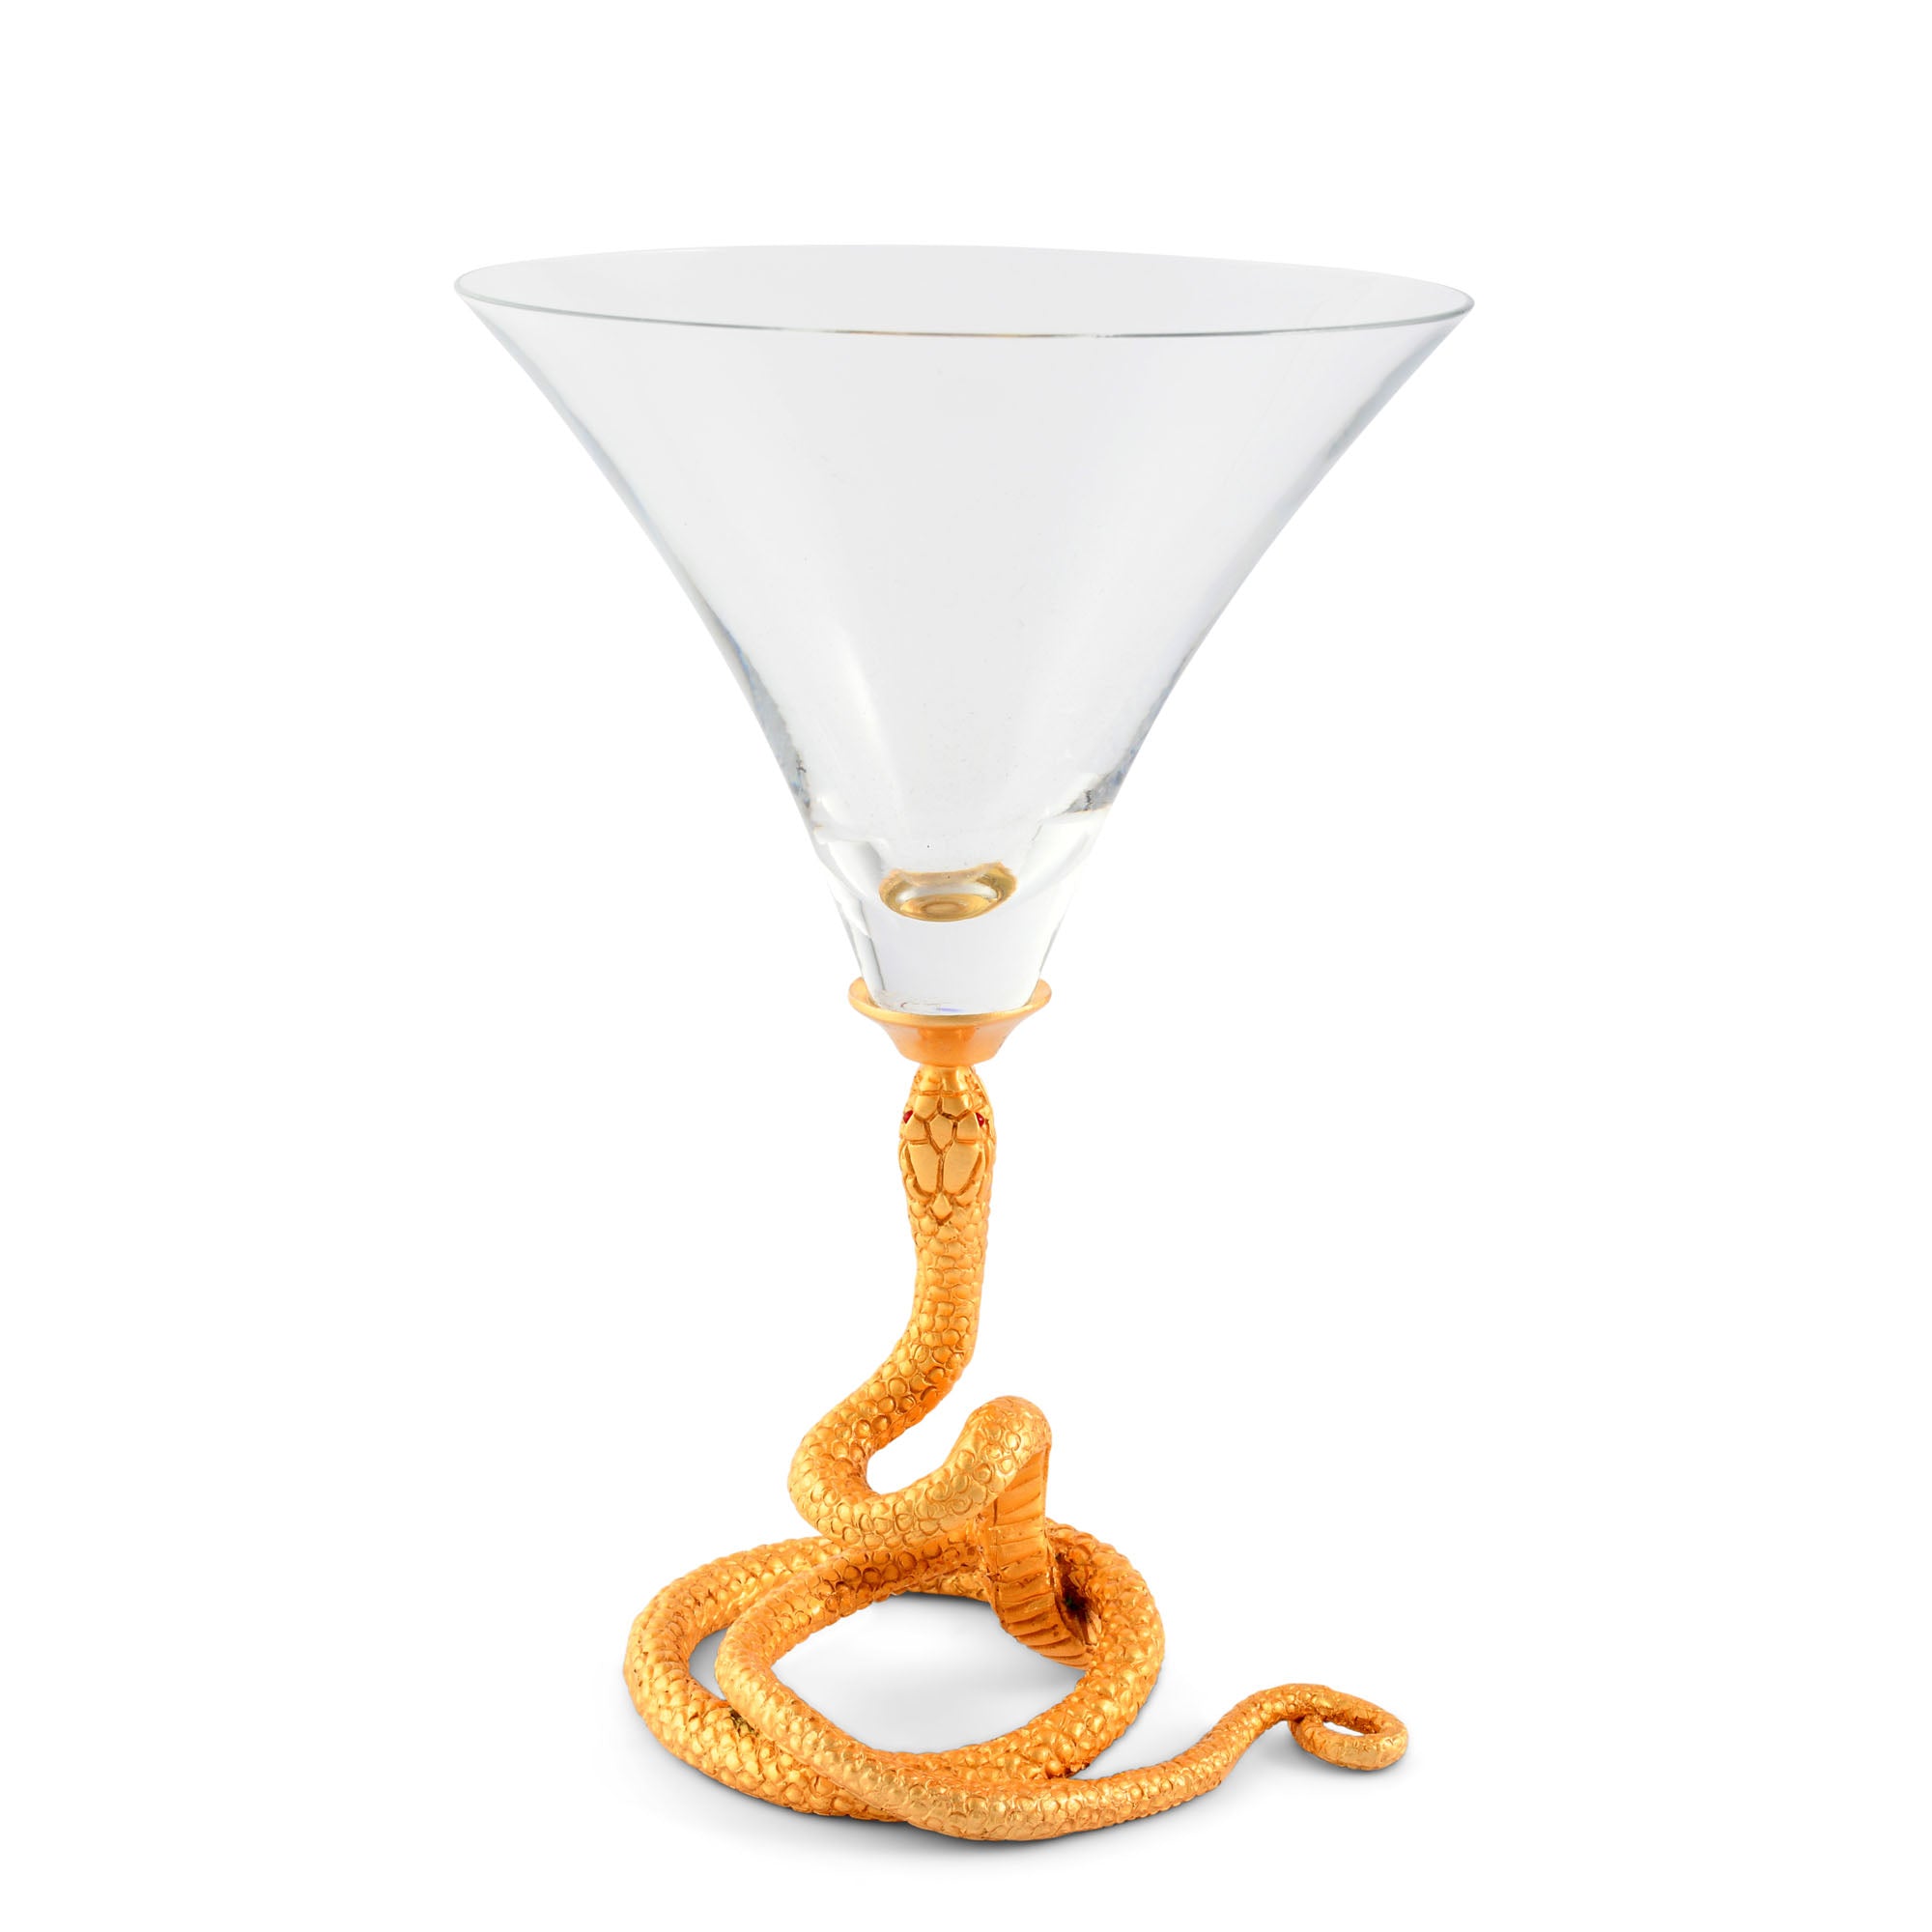 Vagabond House Snake Cocktail / Martini Glass Product Image